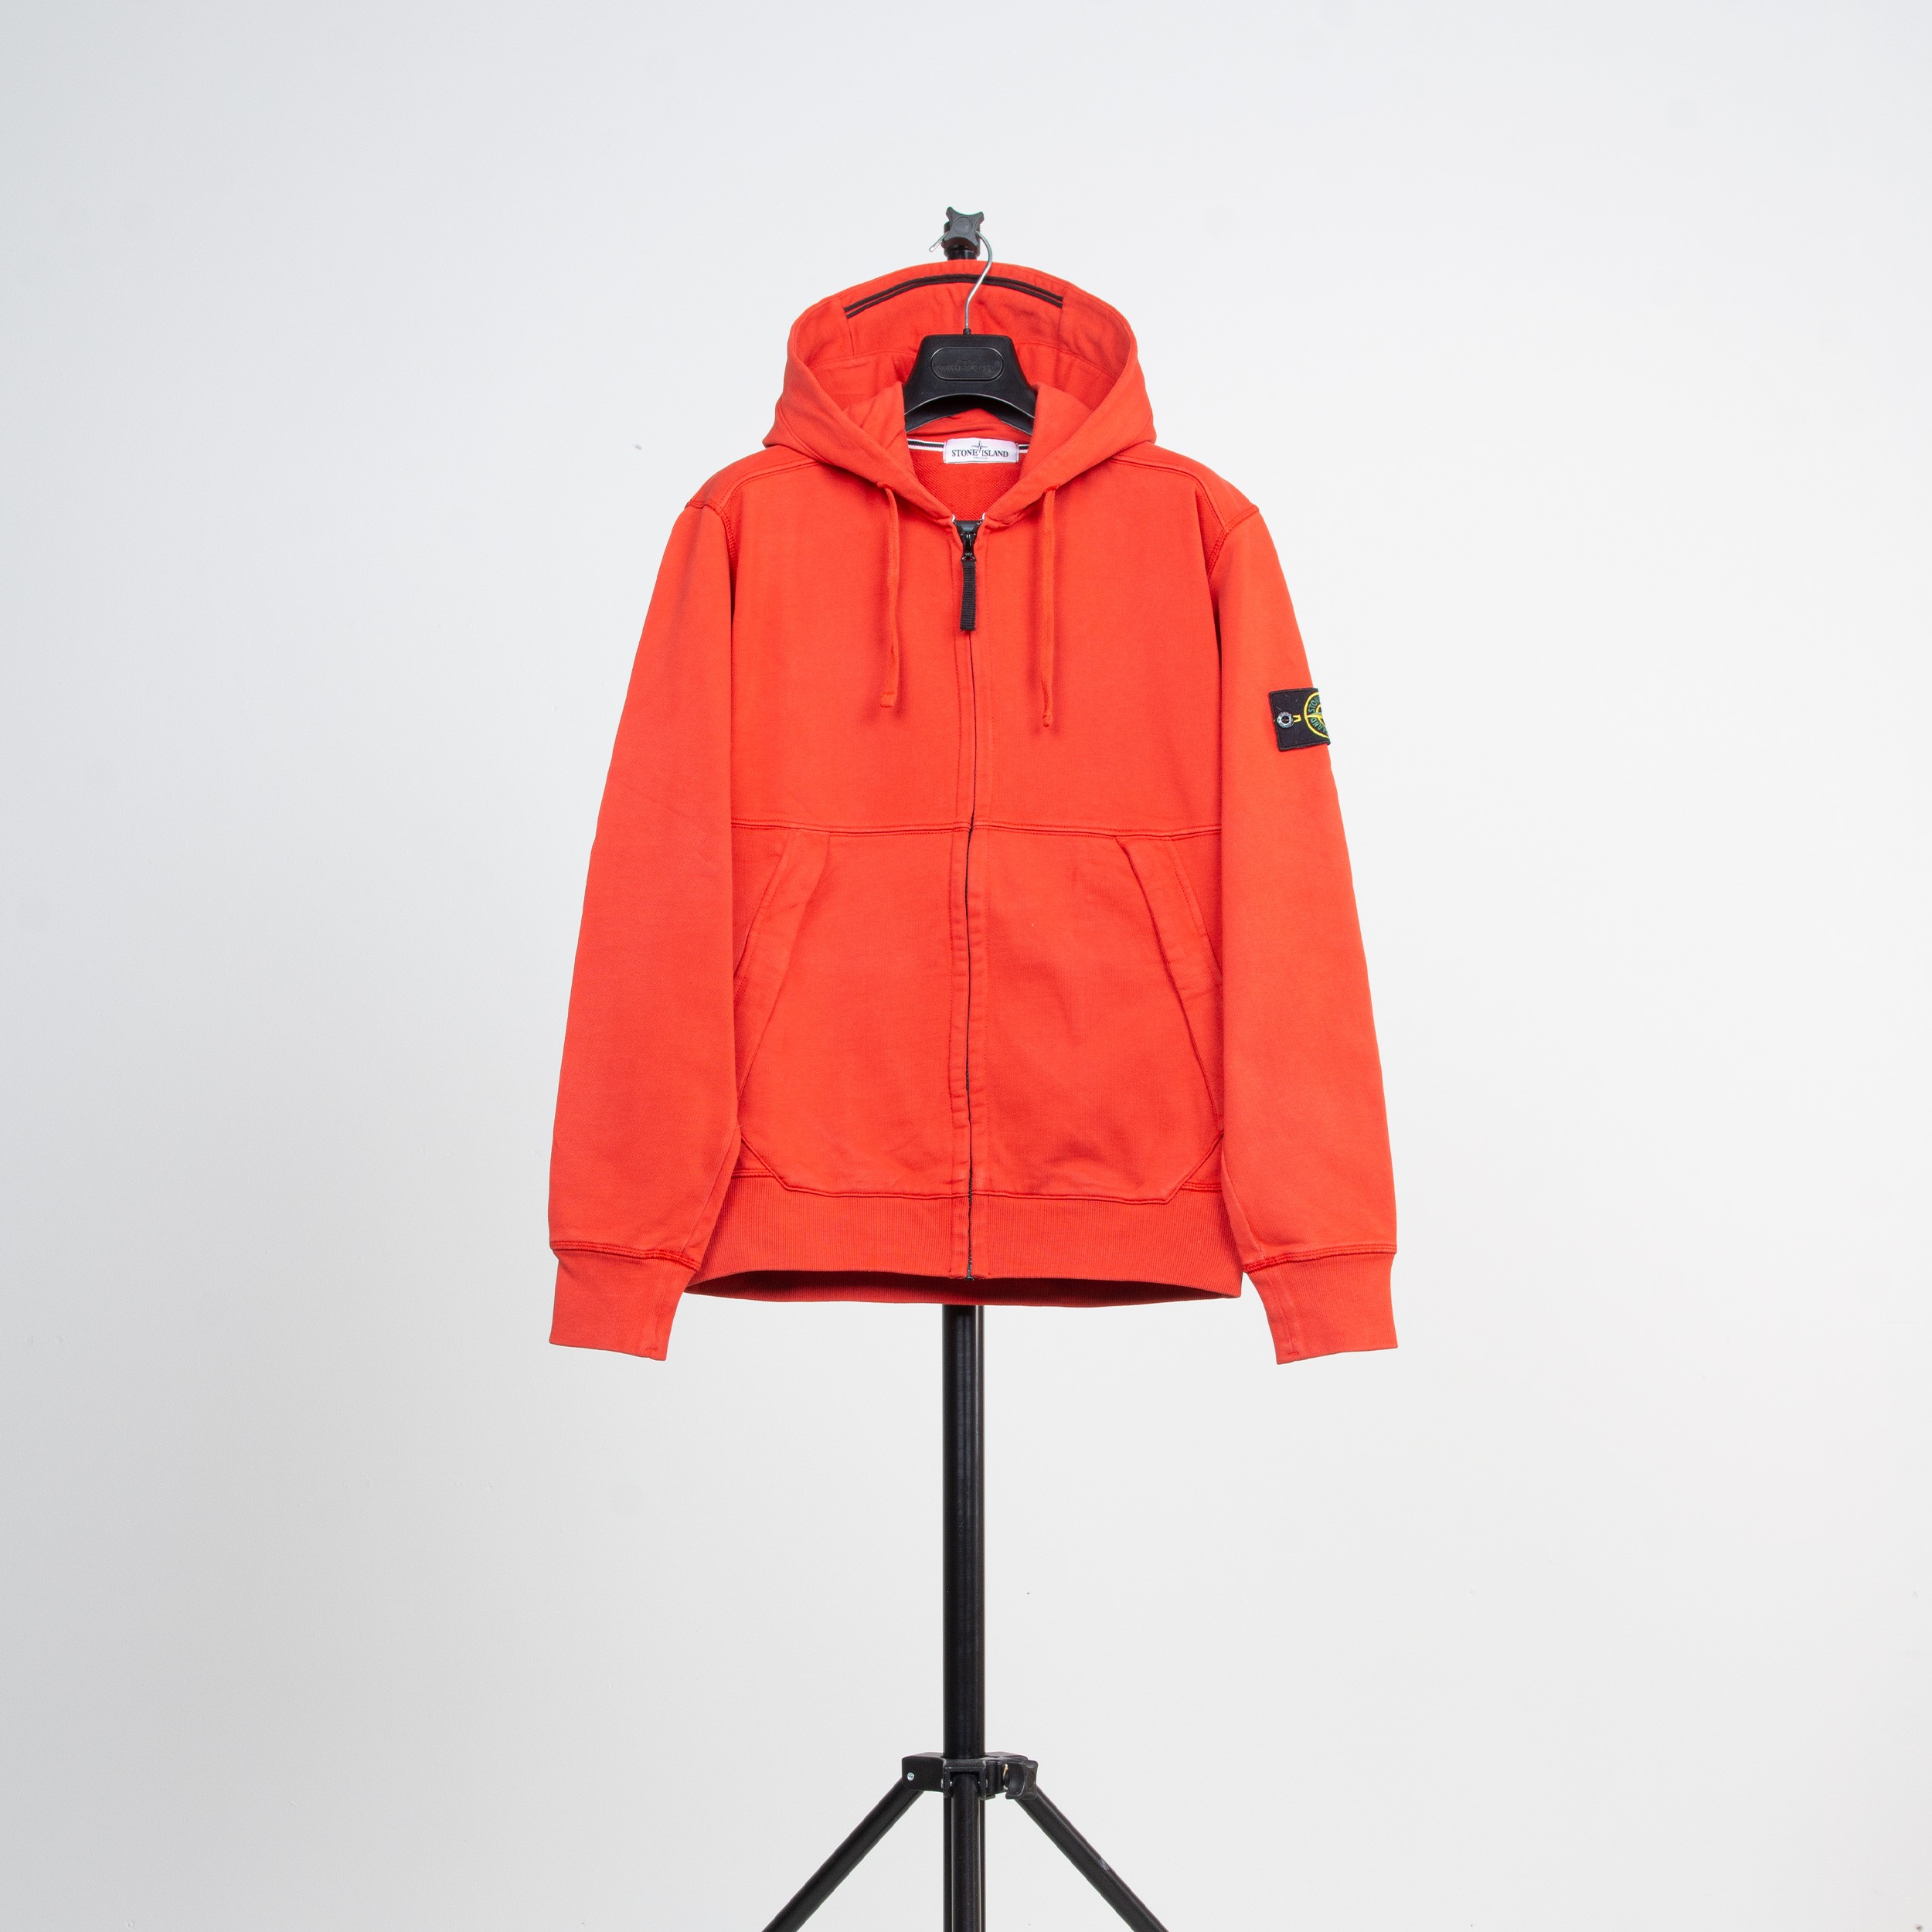 RE-POCKETS STONE ISLAND 'Classic' Full Zip Hooded Sweatshirt Orange